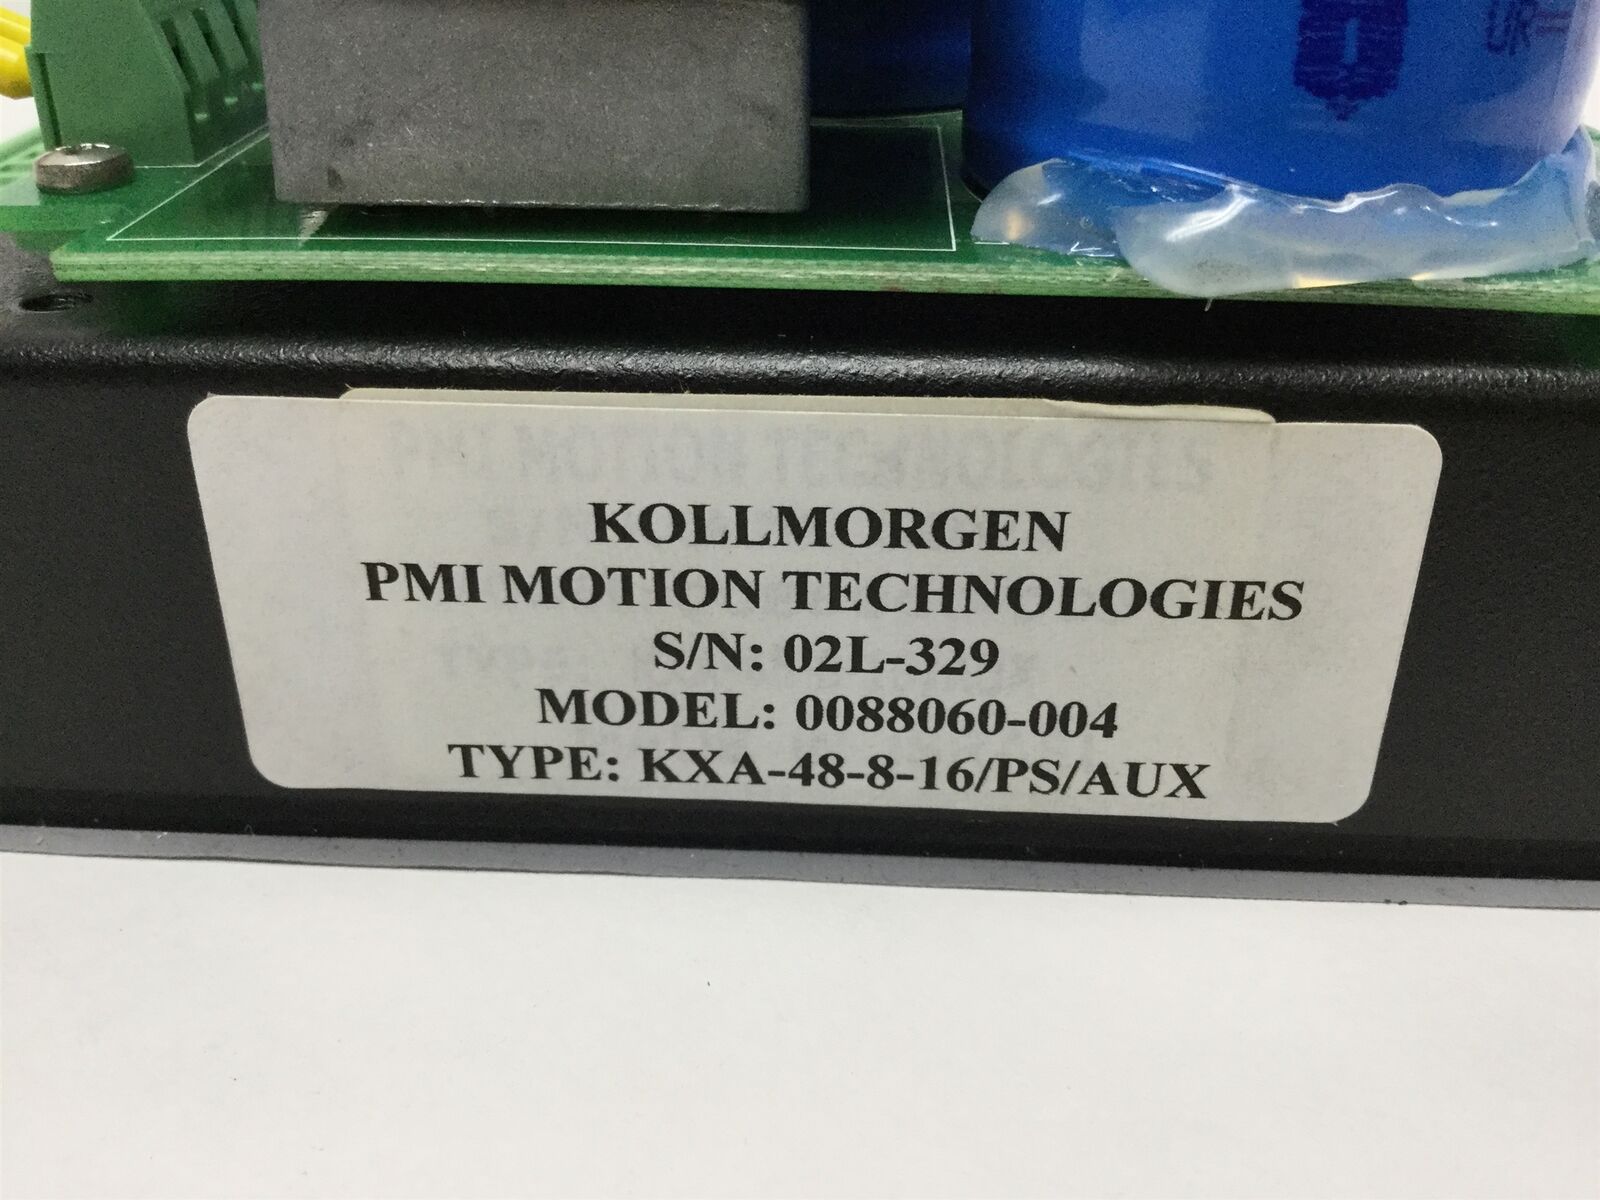 Kollmorgen PMI Motion Technologies0088060-004电源伺服放大器 0088060-004,Kollmorgen PMI Motion Technologies,Kollmorgen PMI Motion Technologies00